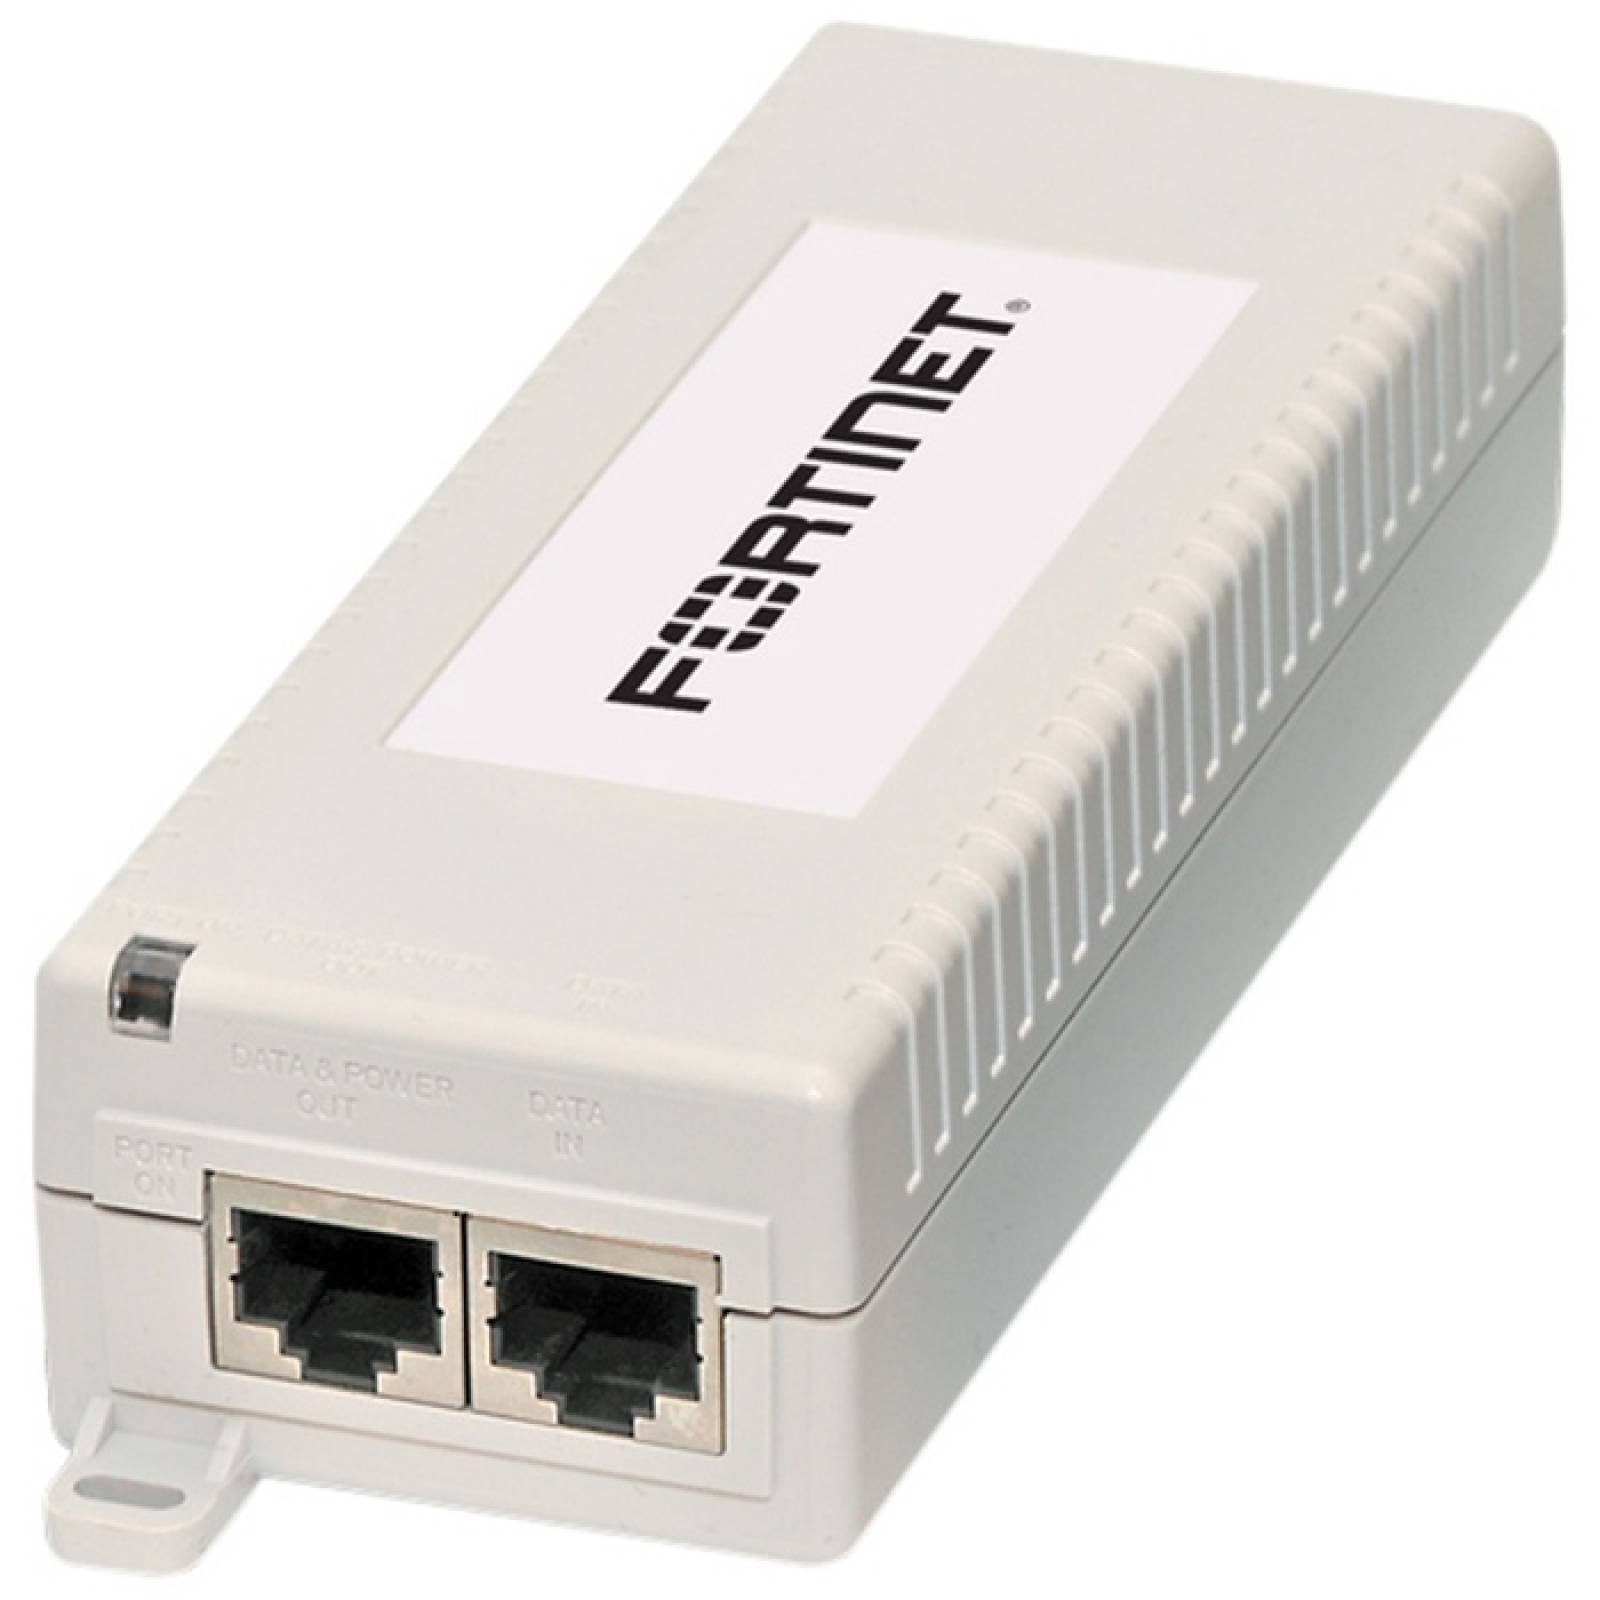 Fortinet FortiAP GPI115 Inyector de alimentacin a travs de Ethernet